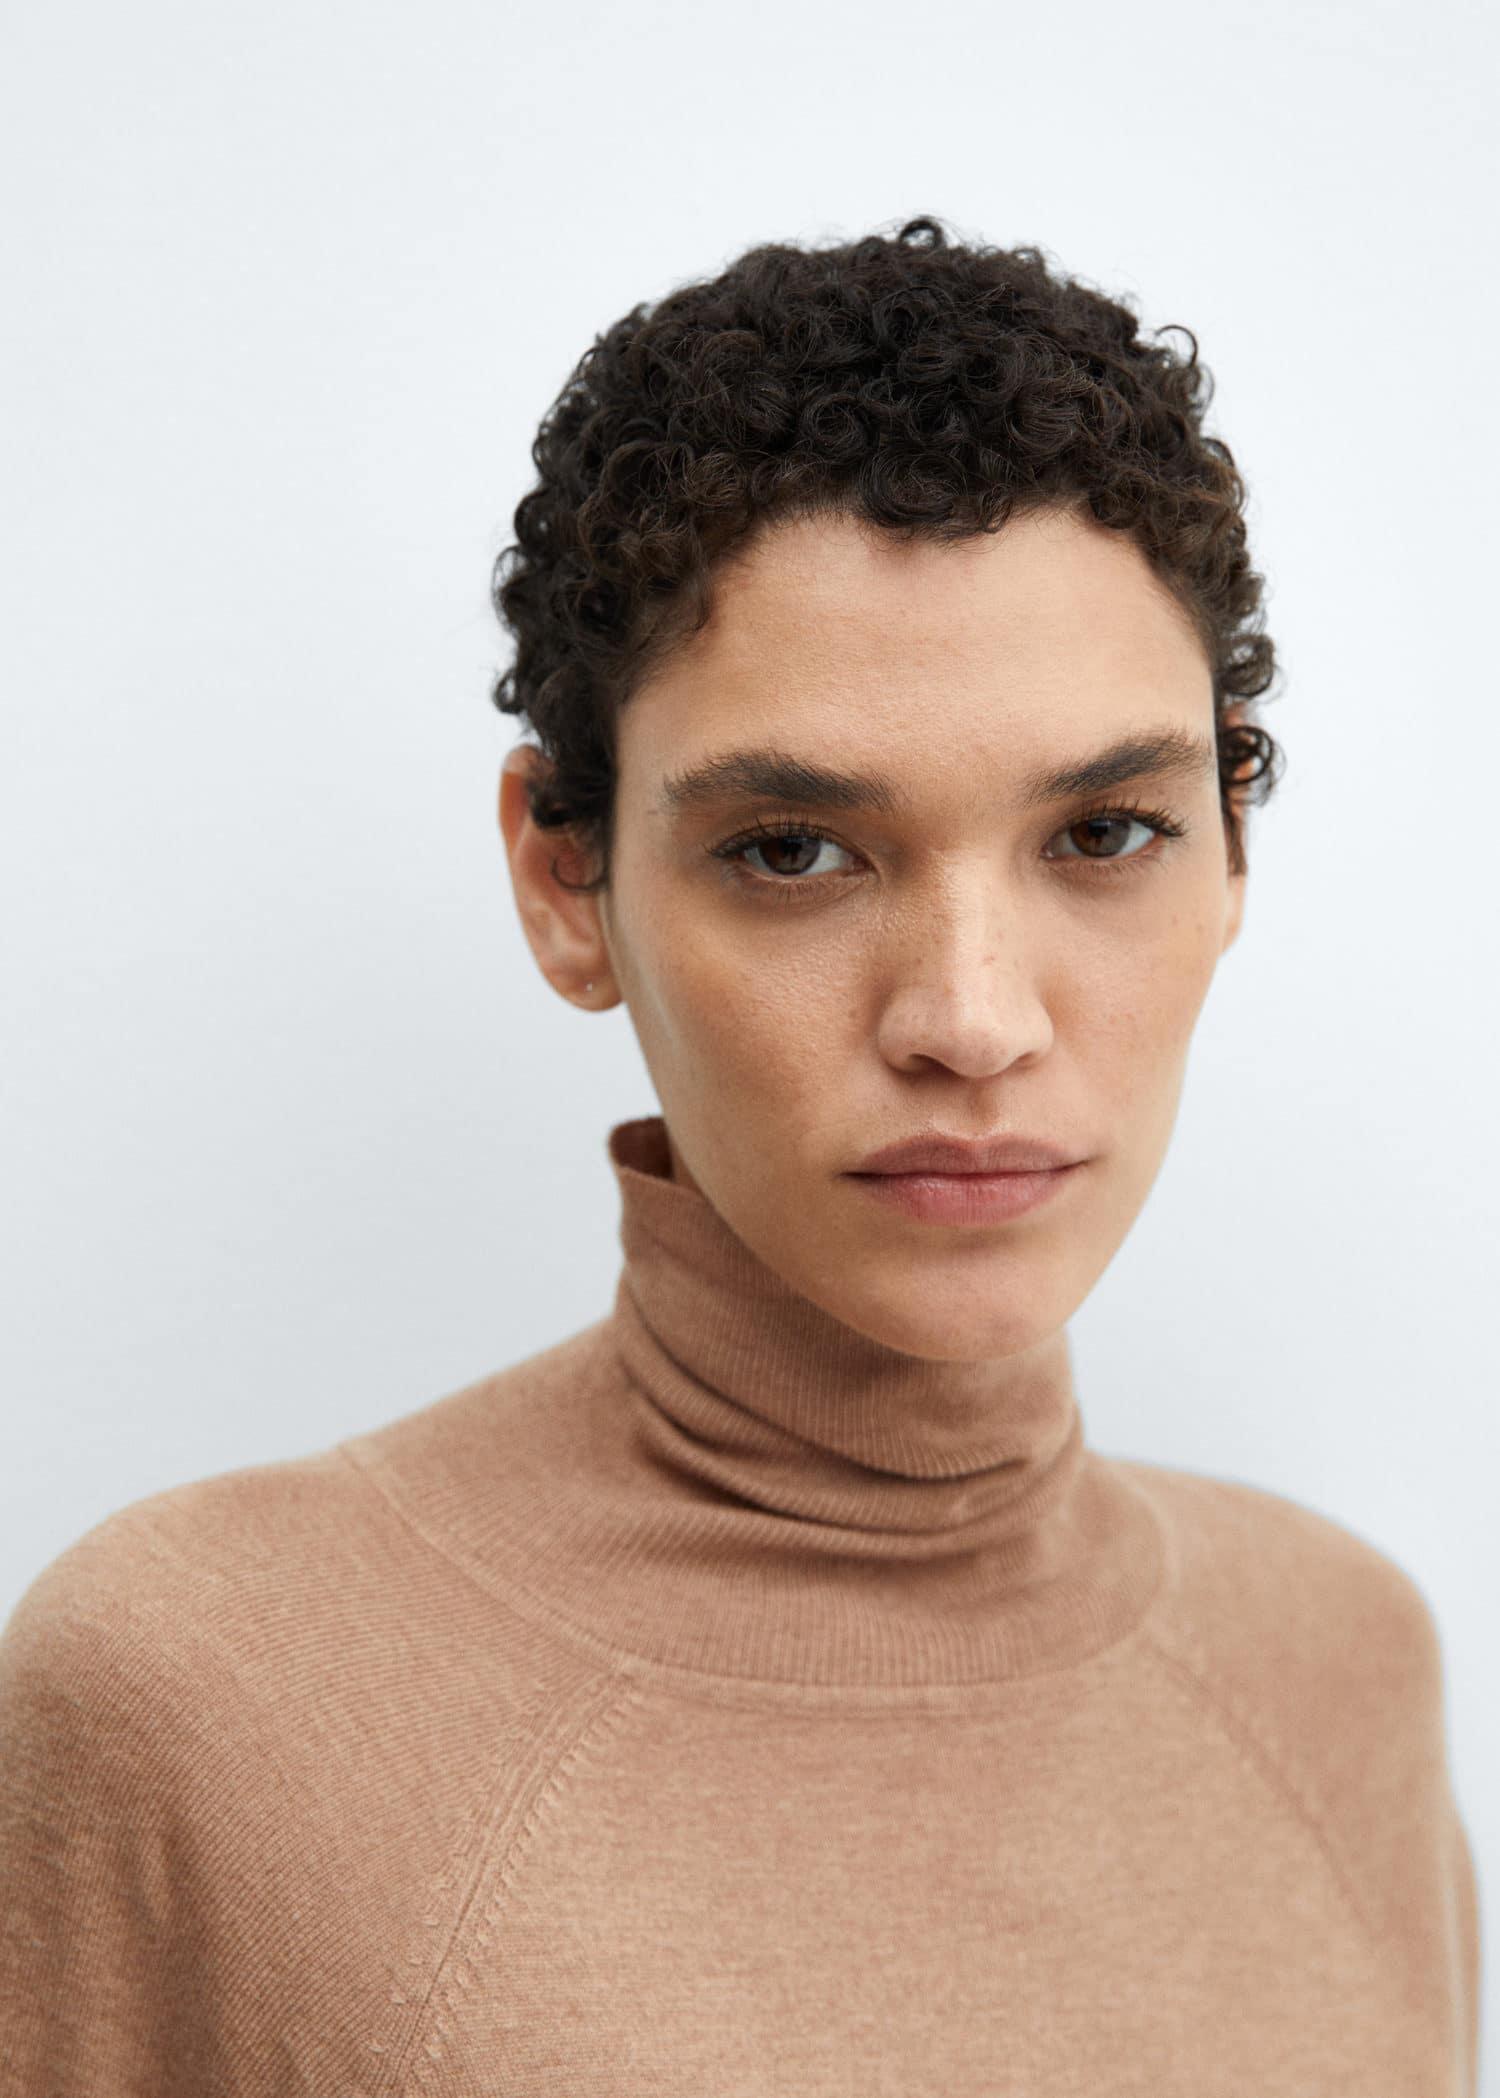 Mango - Brown Fine-Knit Turtleneck Sweater